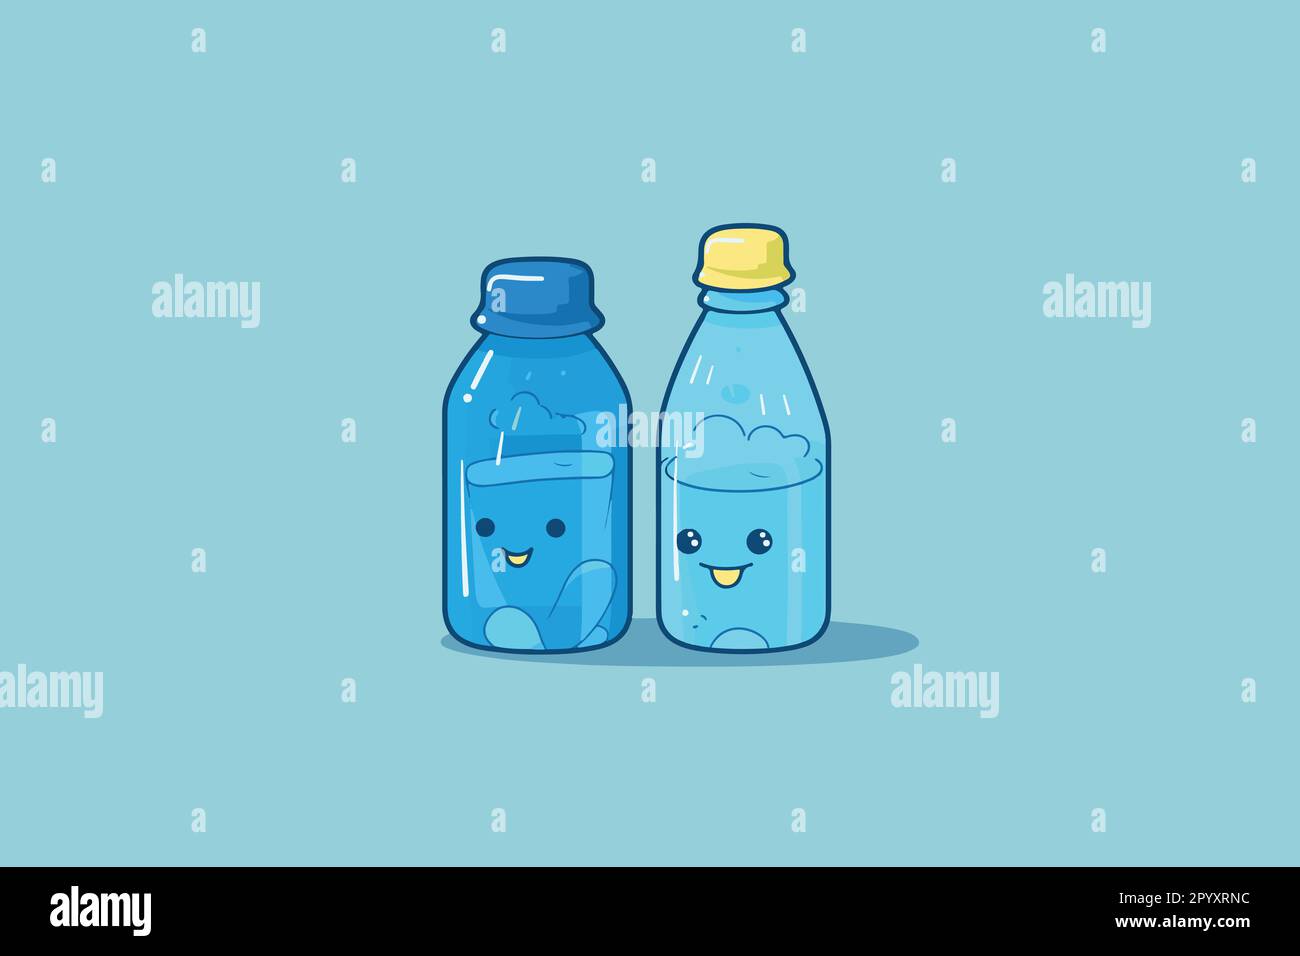 bottle emoji